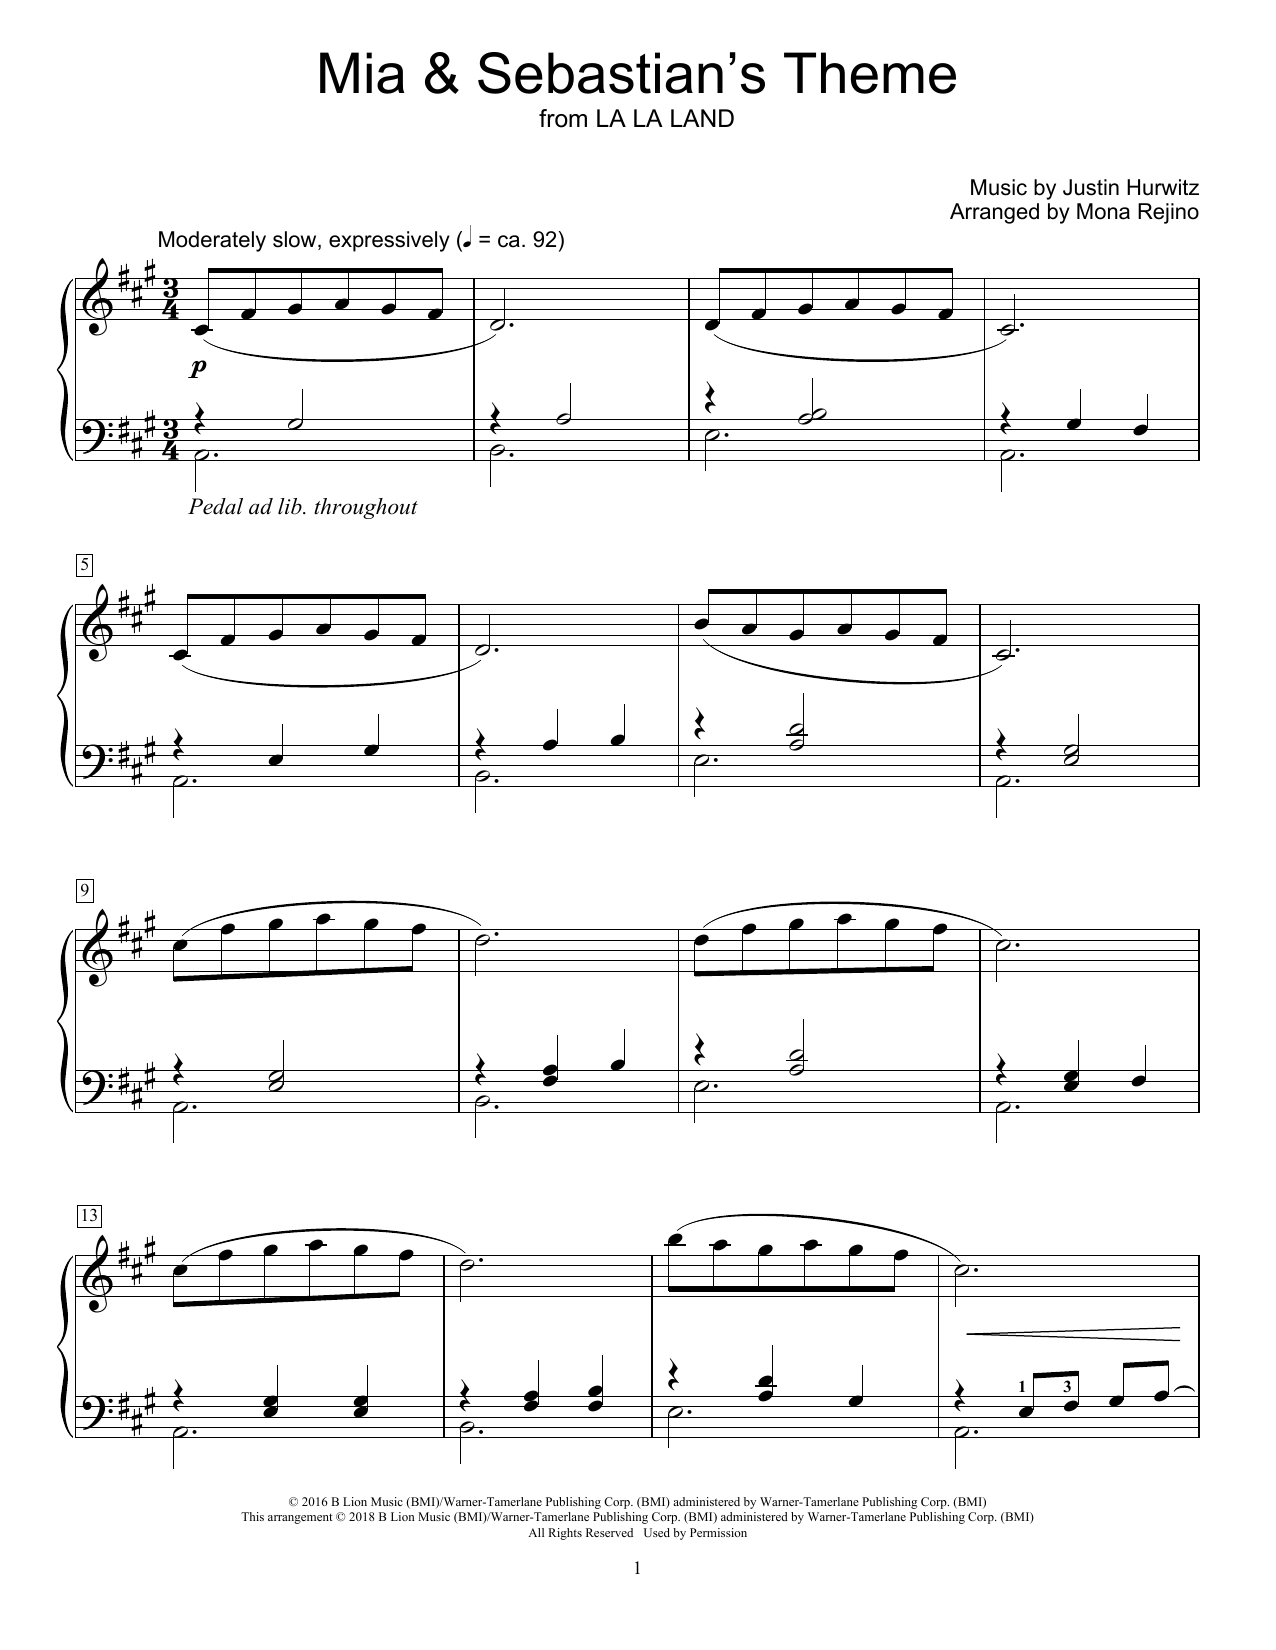 Download Mona Rejino Mia & Sebastian's Theme Sheet Music and learn how to play Educational Piano PDF digital score in minutes